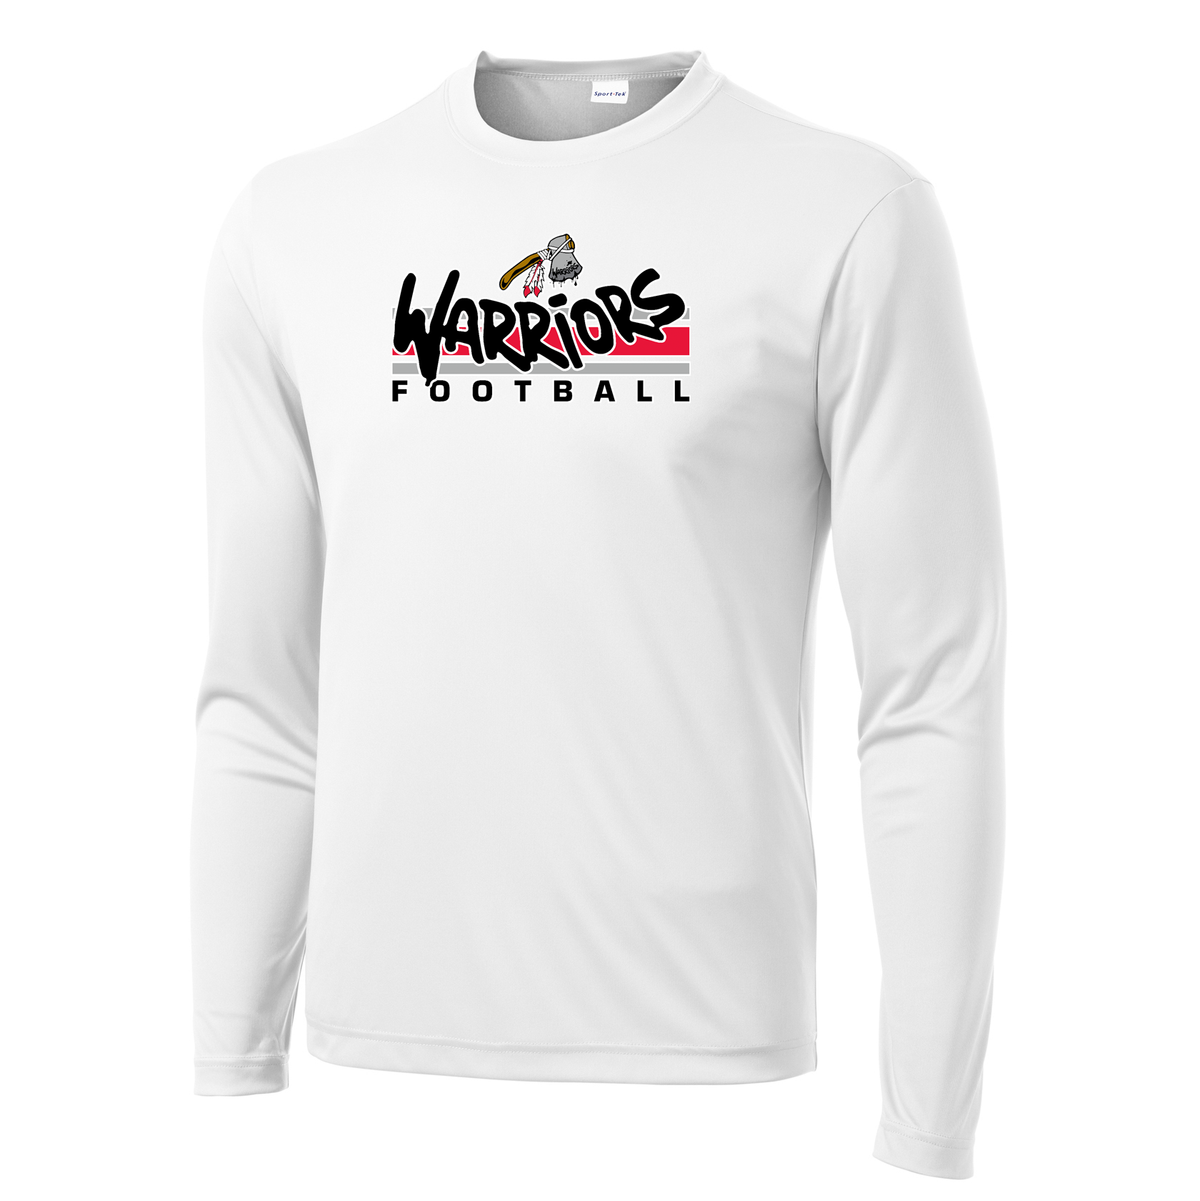 WV Warriors Football Long Sleeve Performance Shirt